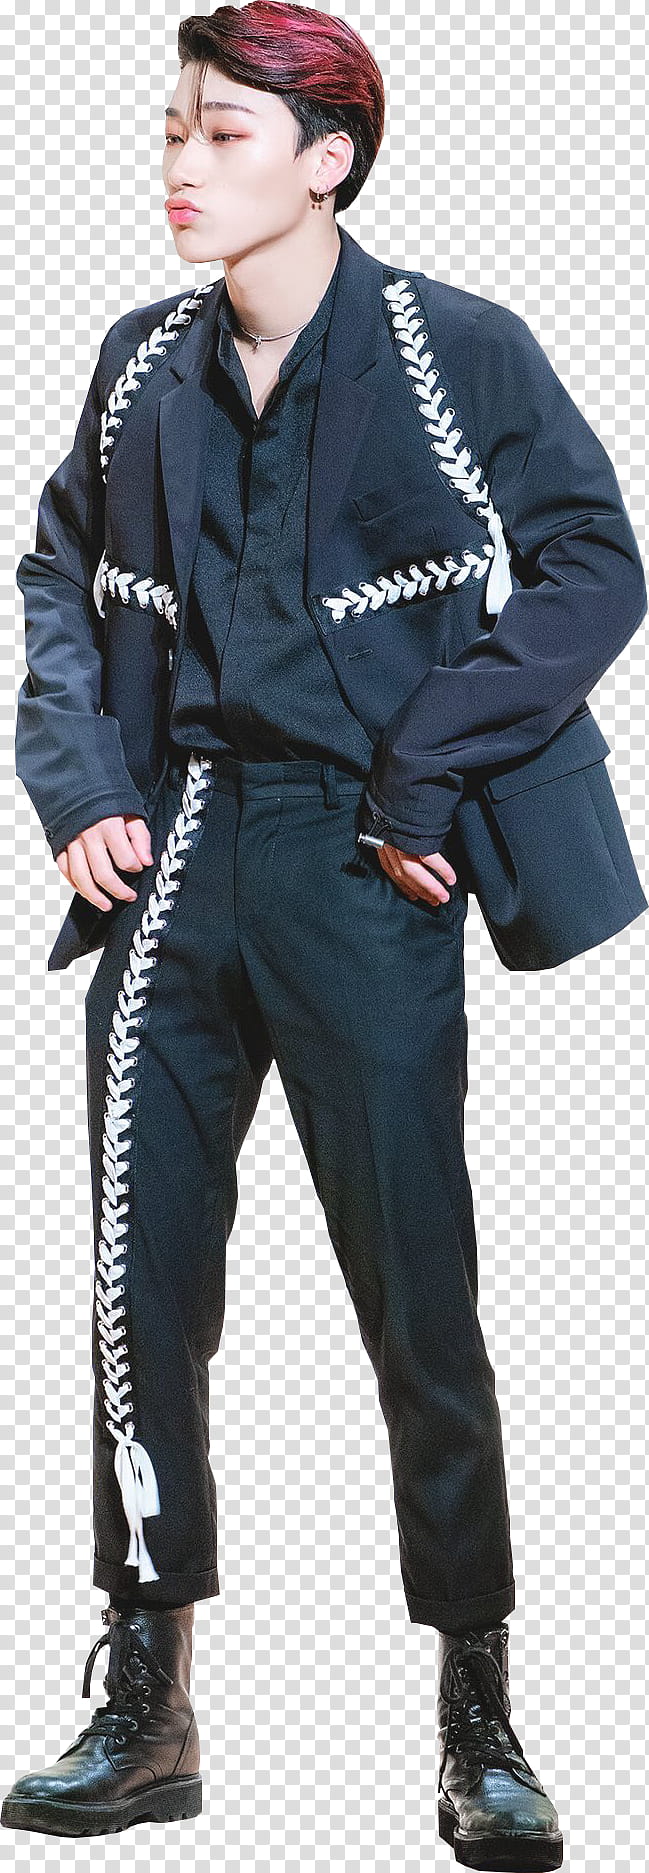 man in black suit transparent background PNG clipart